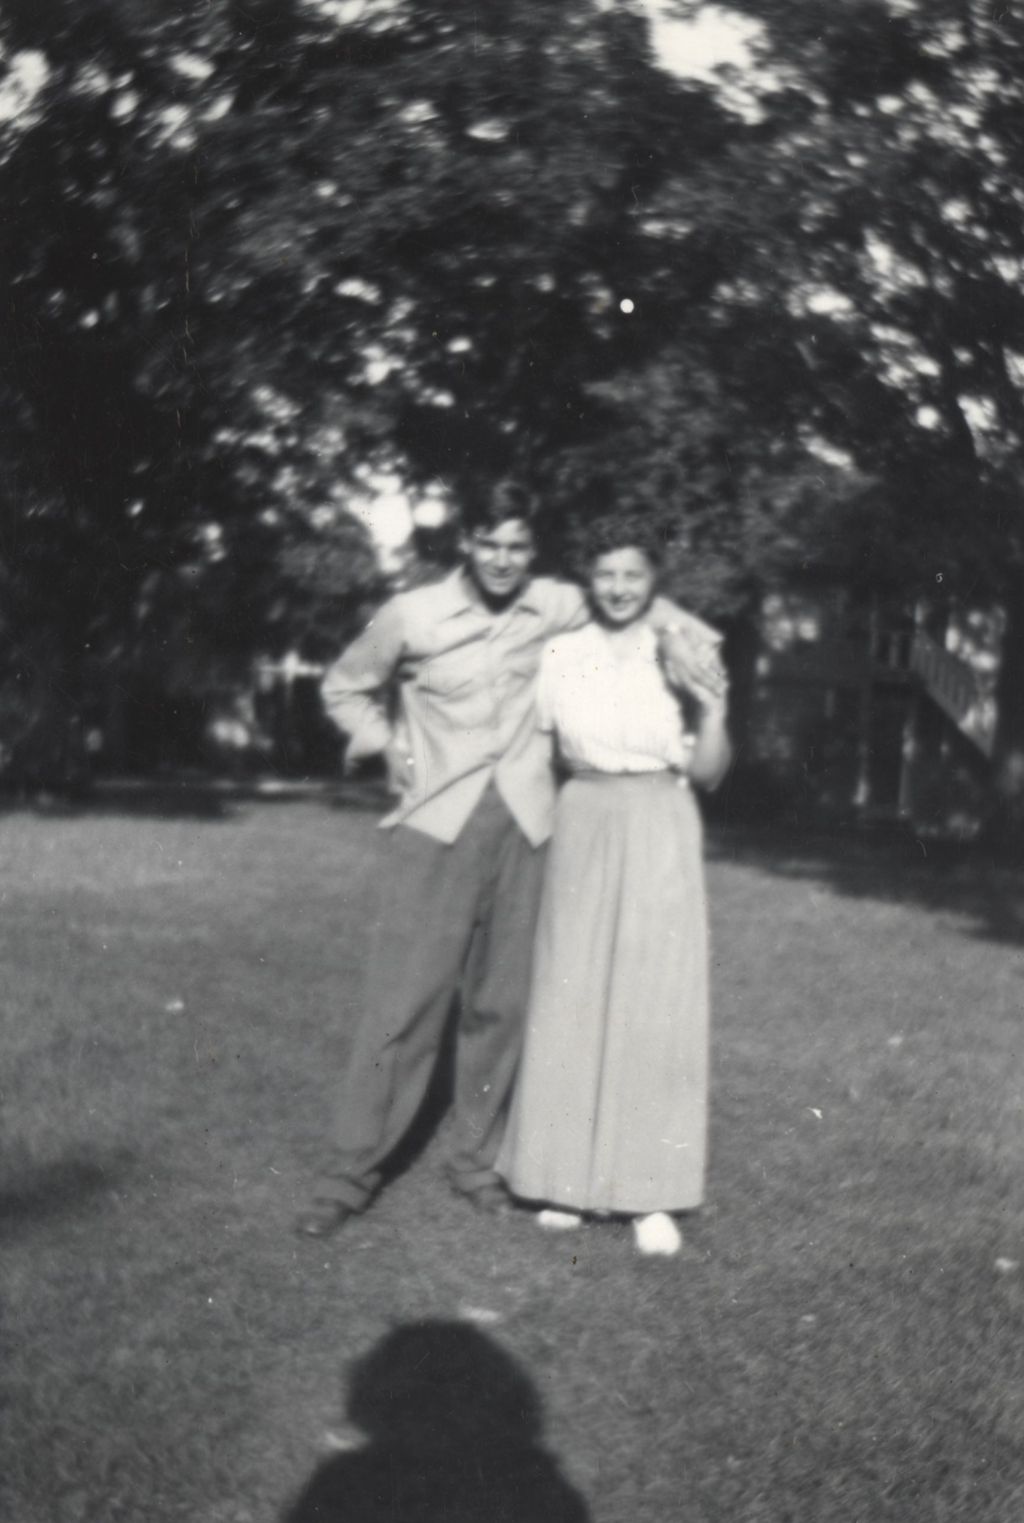 Miniature of Joe Beloshi standing with woman in long skirt